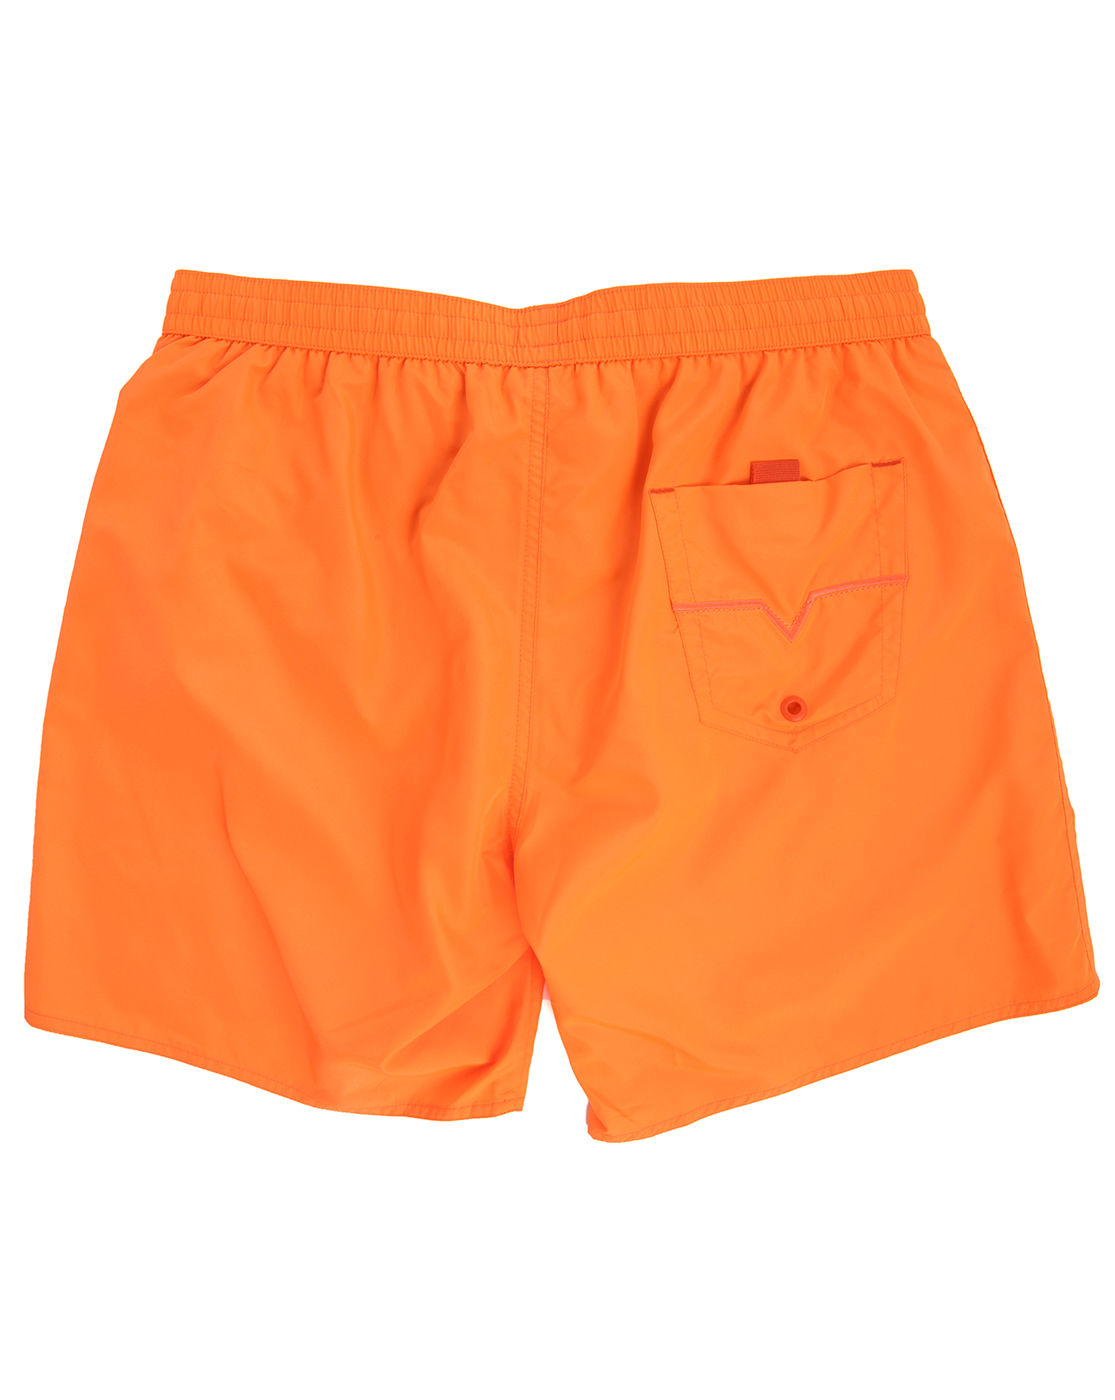 Diesel Markred Orange Long Swim Shorts in Orange for Men | Lyst